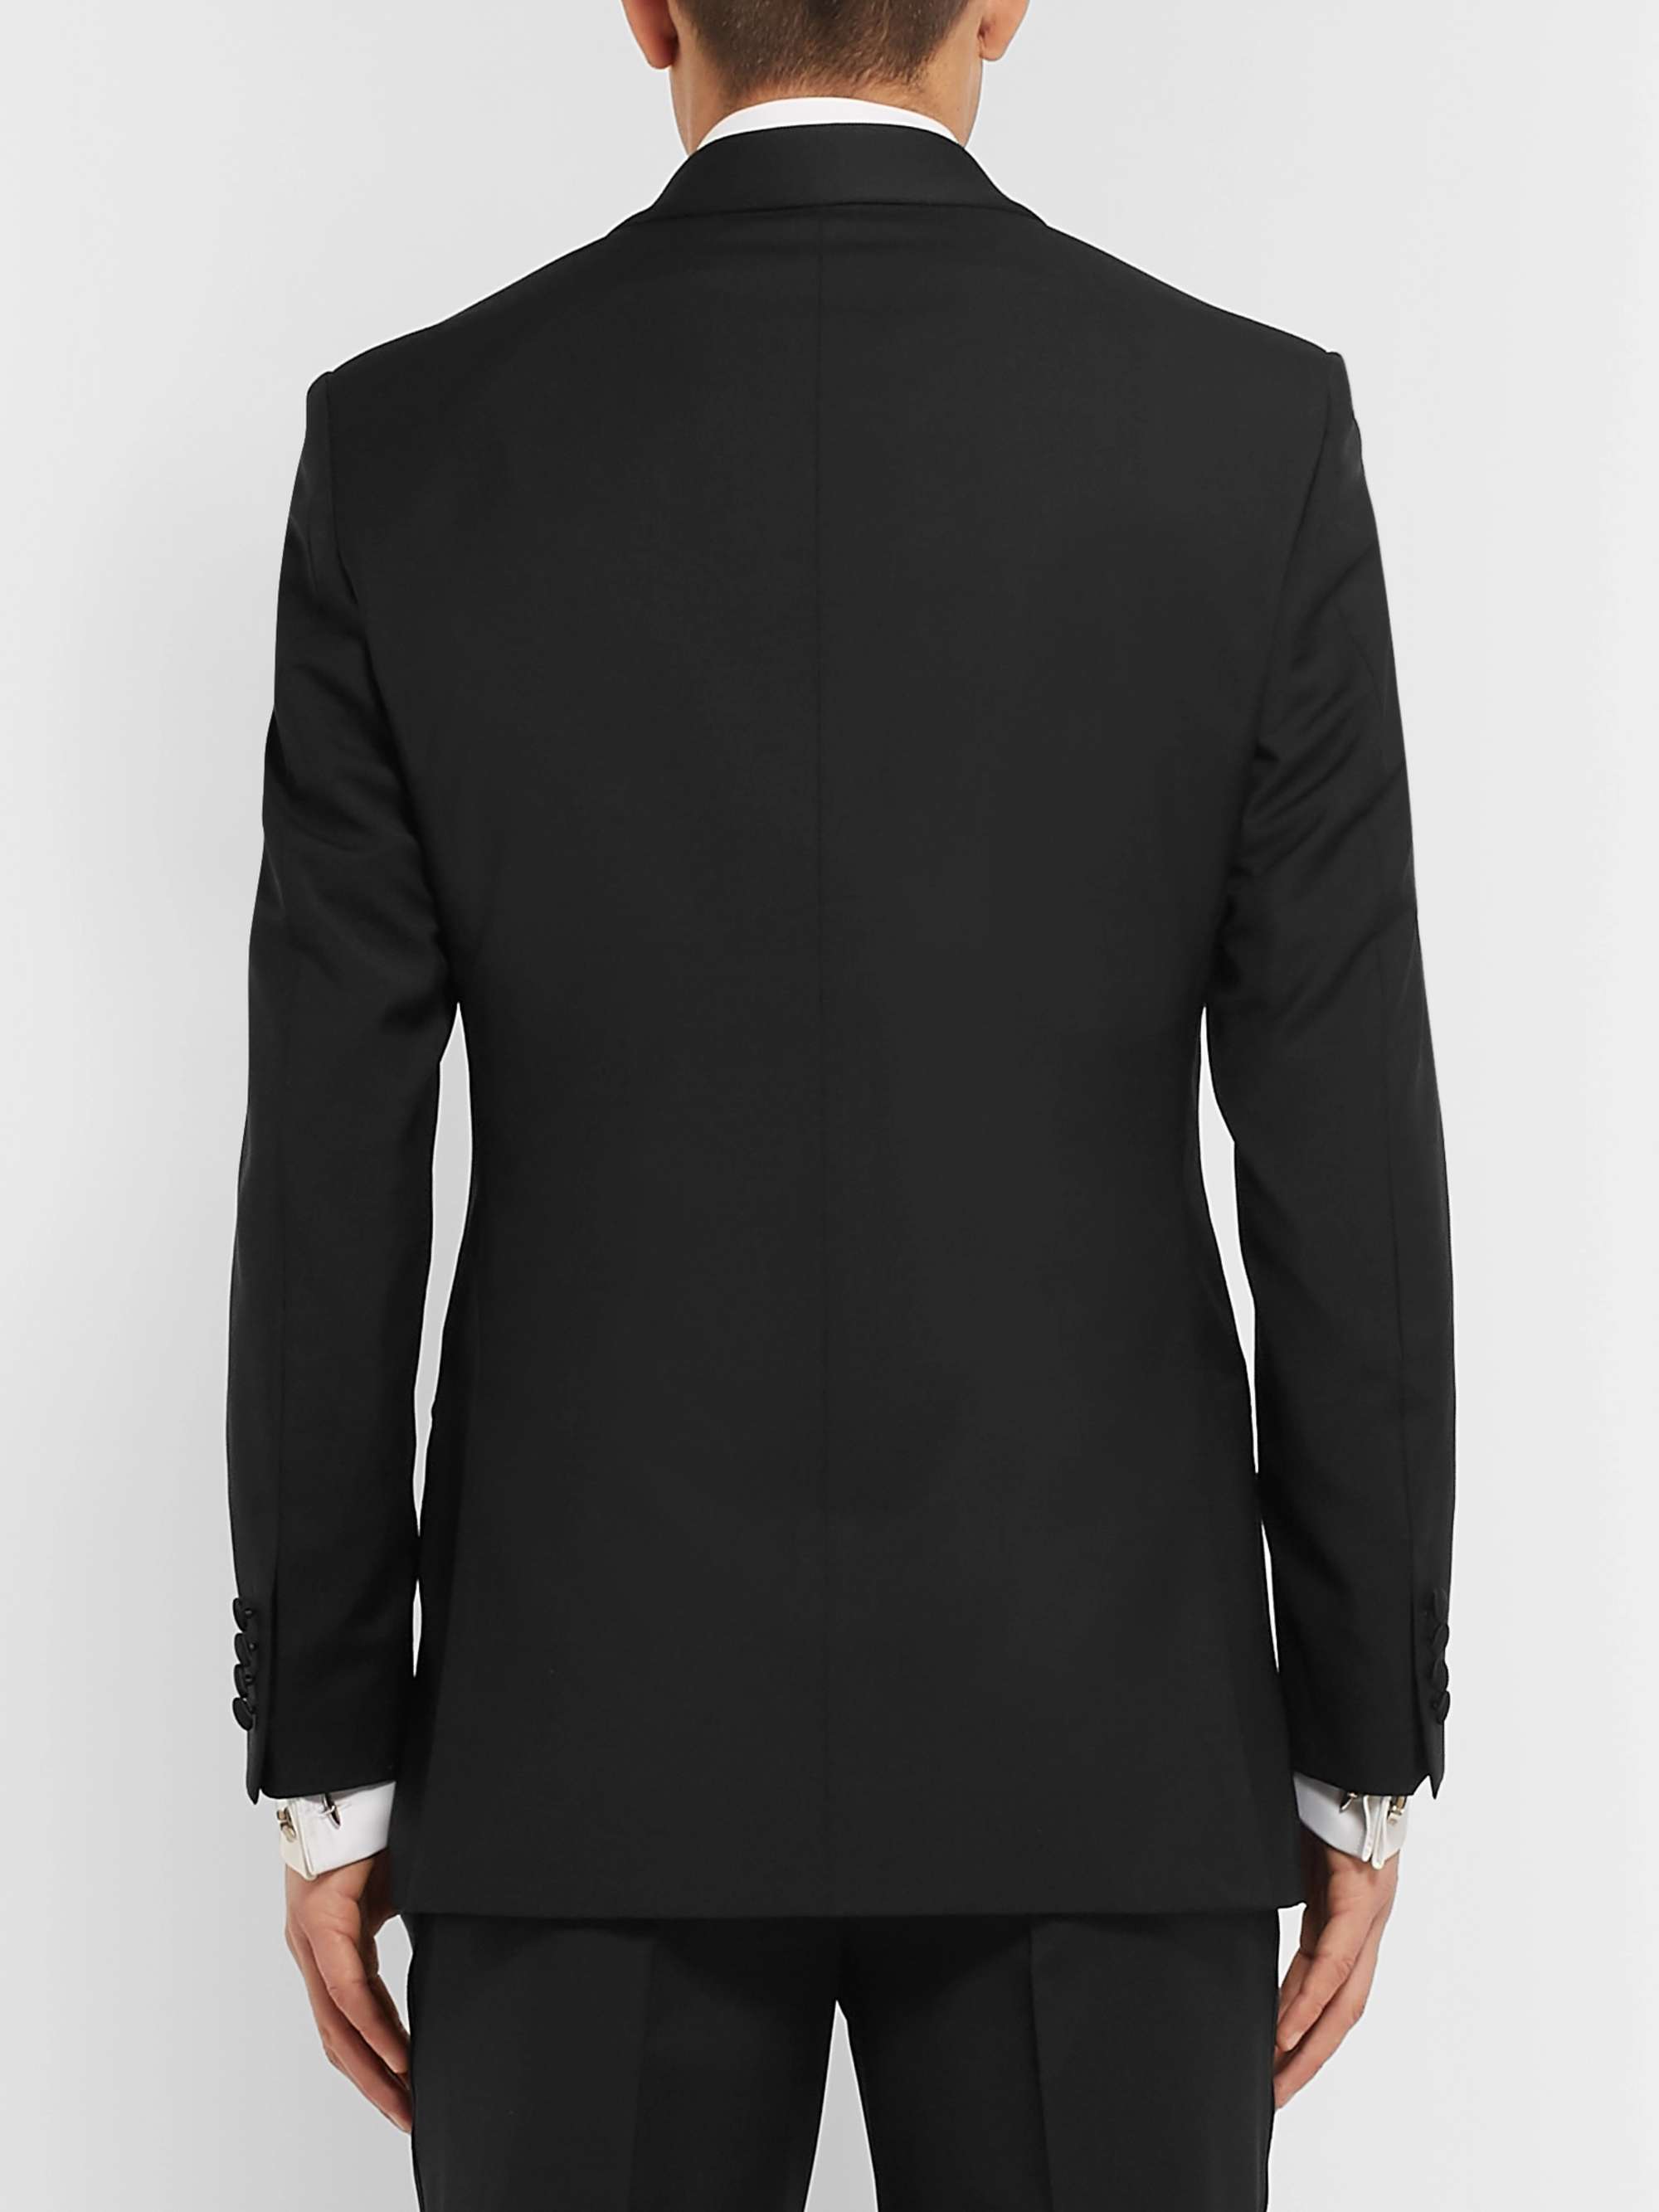 RICHARD JAMES Black Slim-Fit Wool and Mohair-Blend Tuxedo Jacket